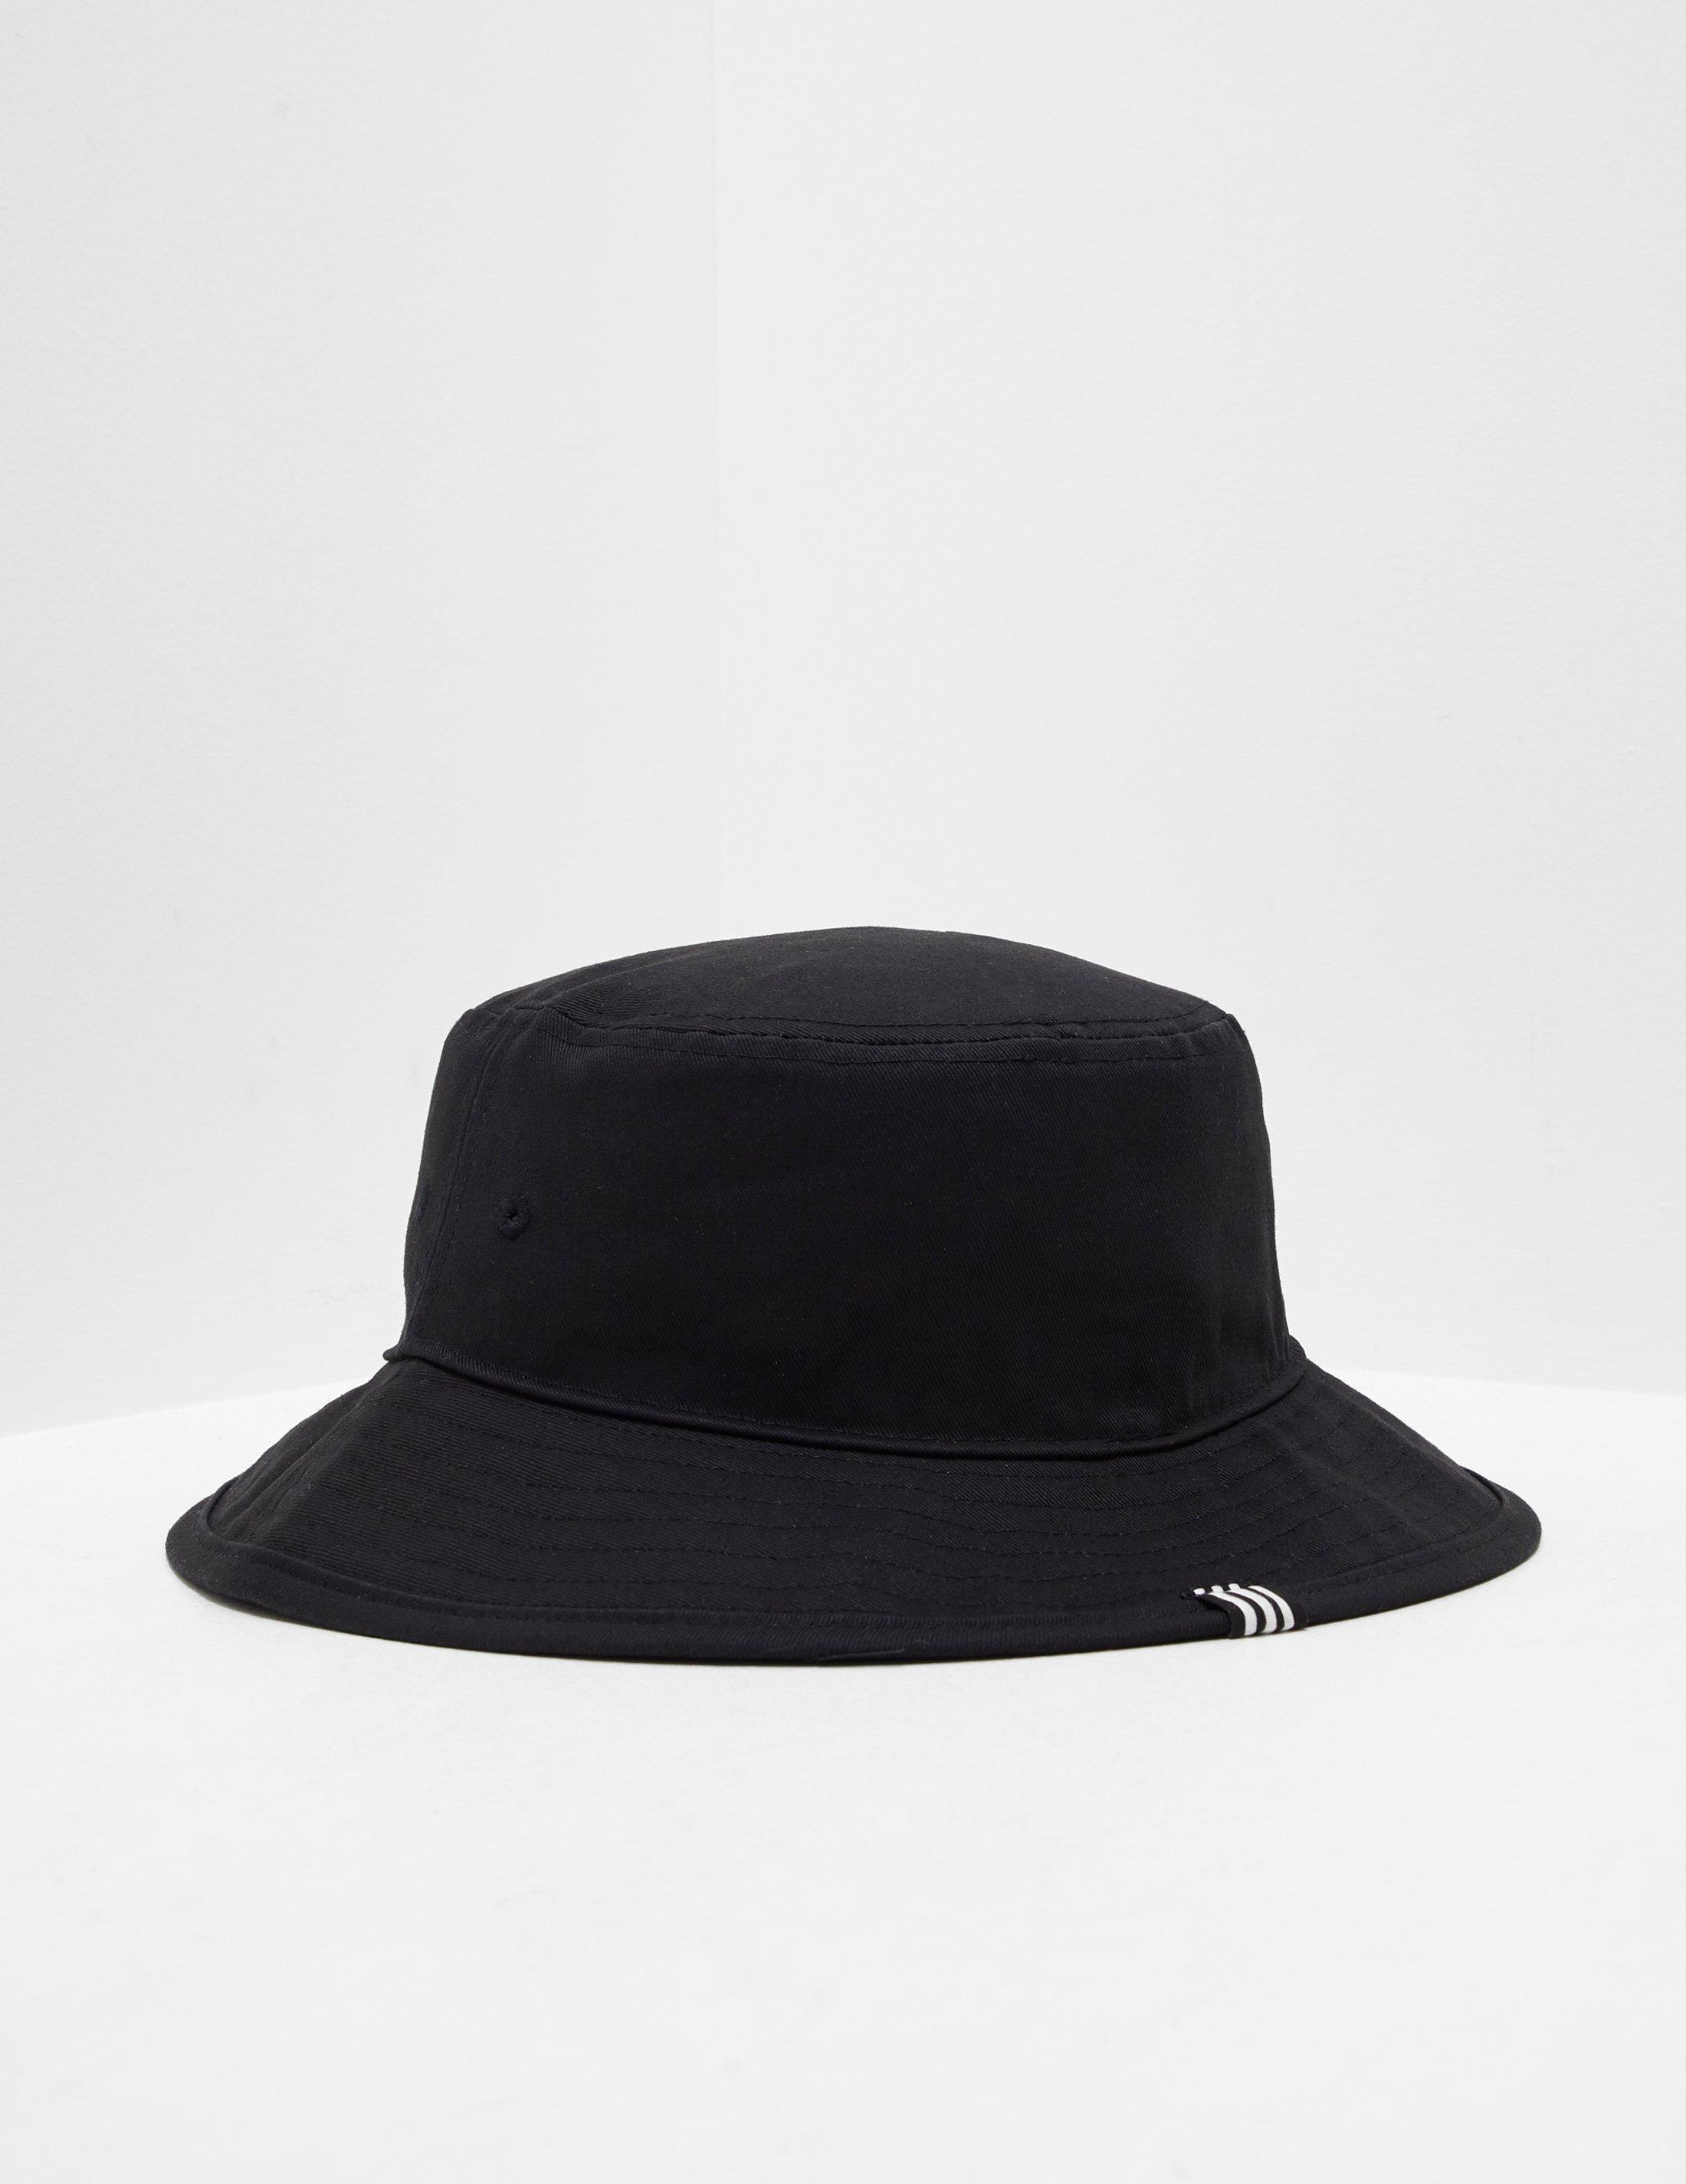 adidas Originals Cotton Mens Trefoil Bucket Hat Black for Men - Lyst